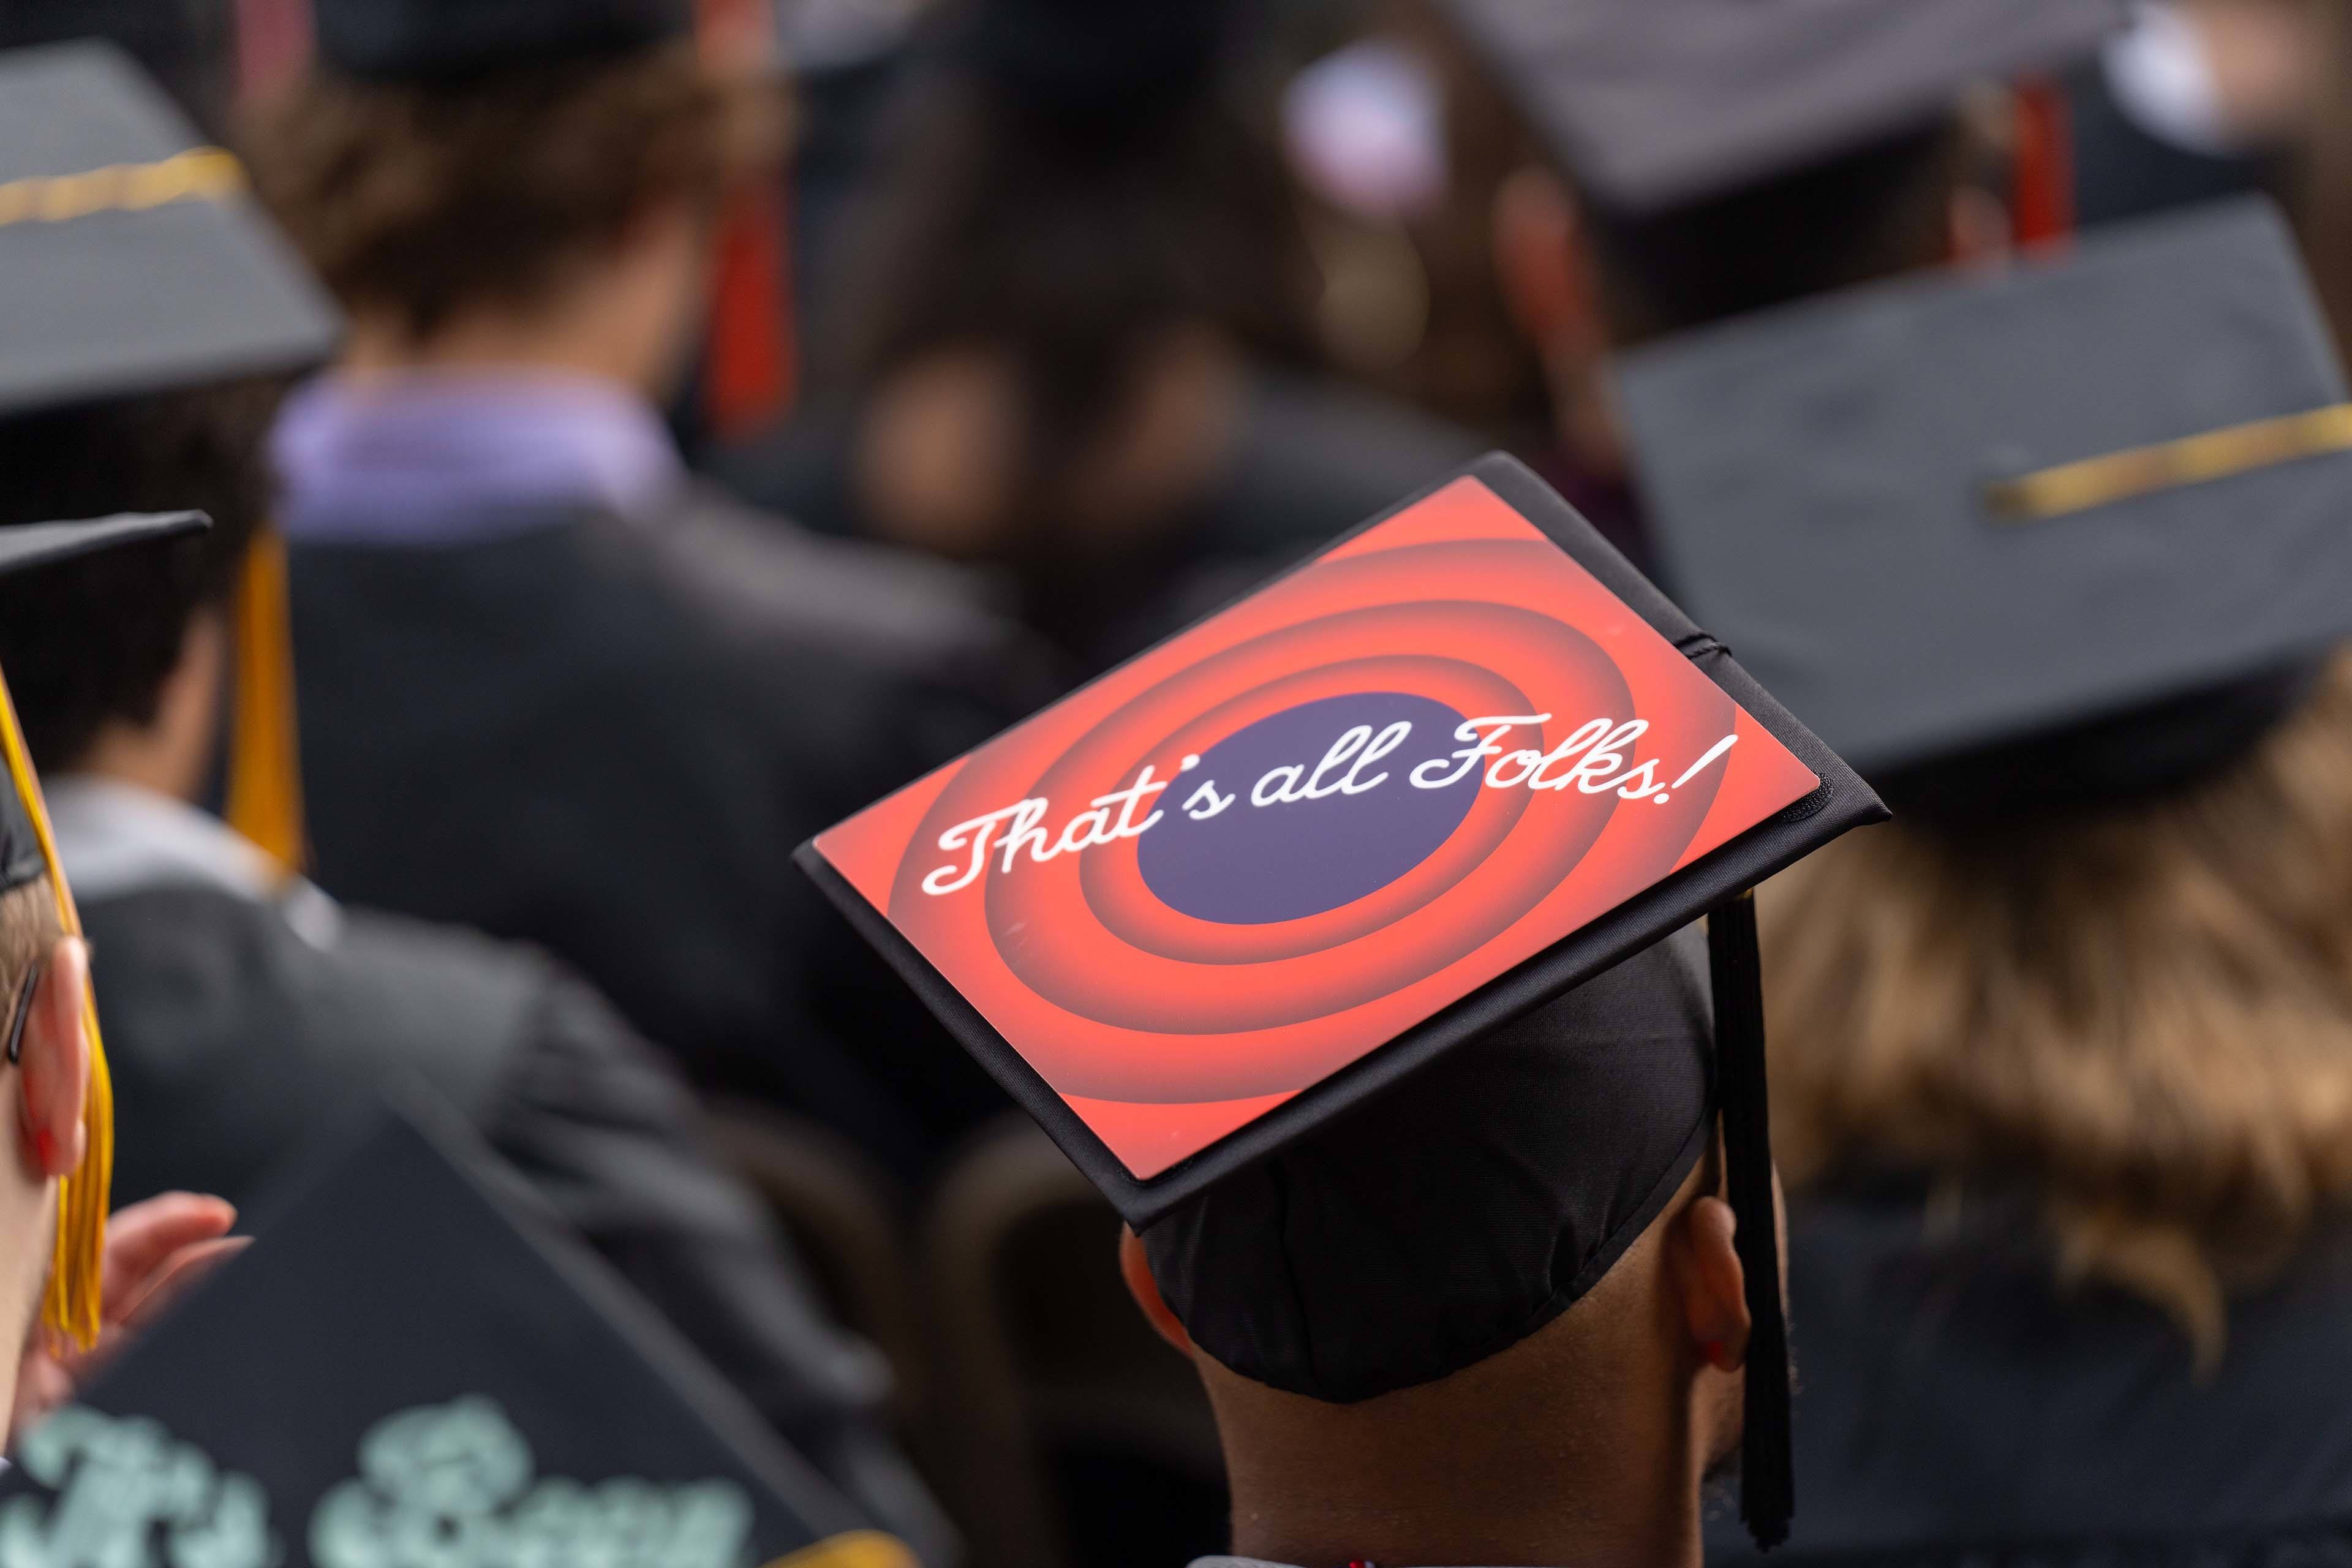 Graduation cap says “That's all folks!" 